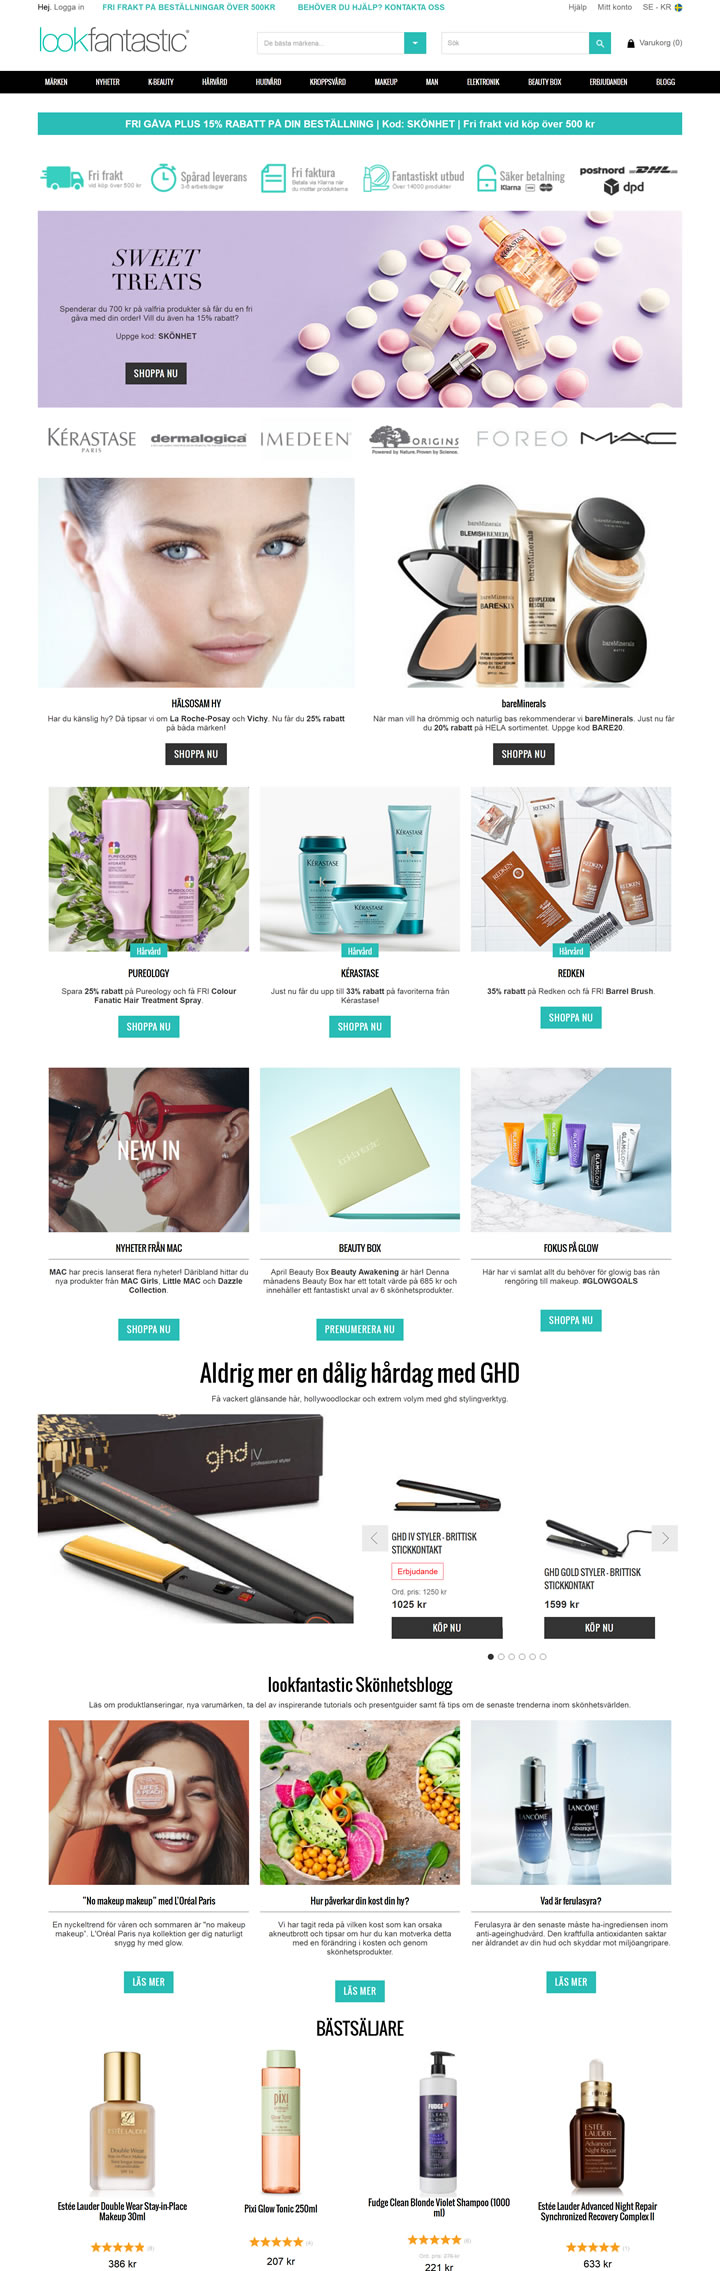 Lookfantastic瑞典：英国知名美妆购物网站